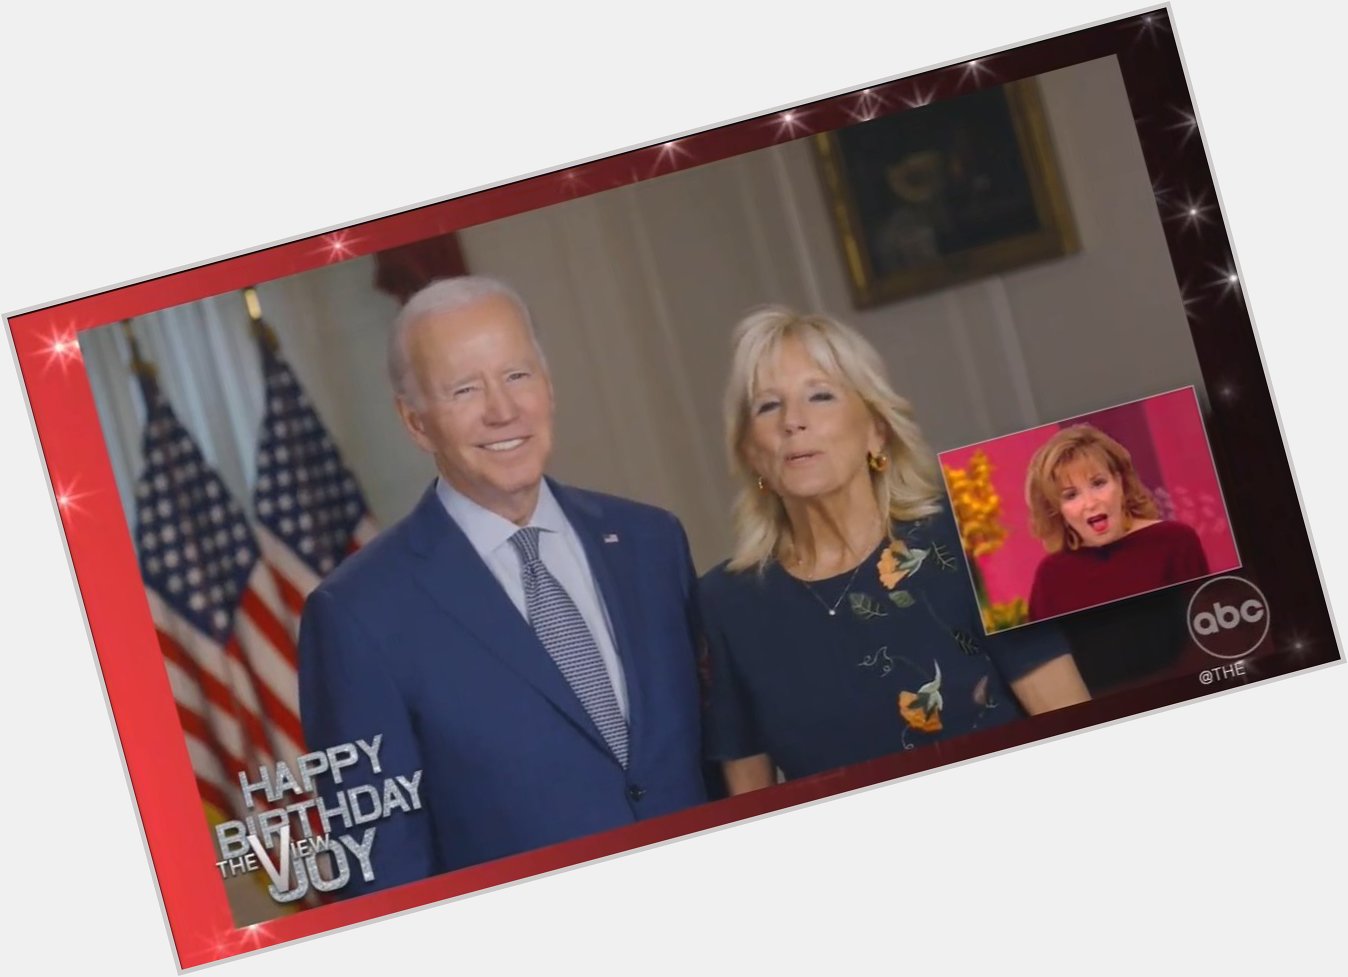 Joe and Jill Biden send a happy birthday message to The View\s Joy Behar.

Behar is visibly gagged. 